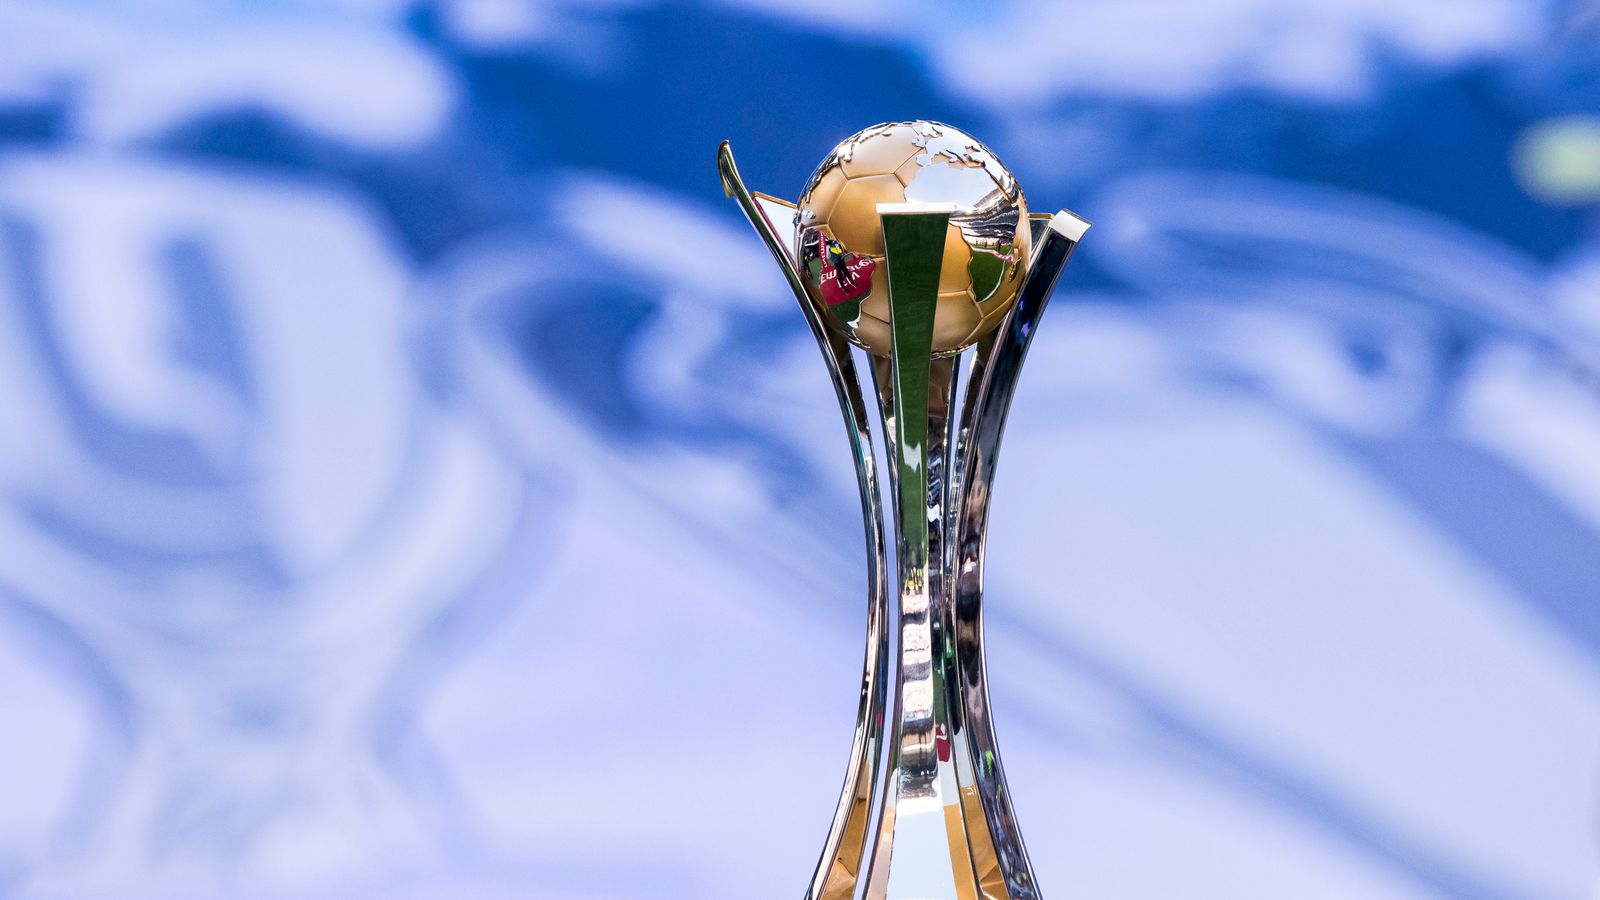 fifa club world cup 2021